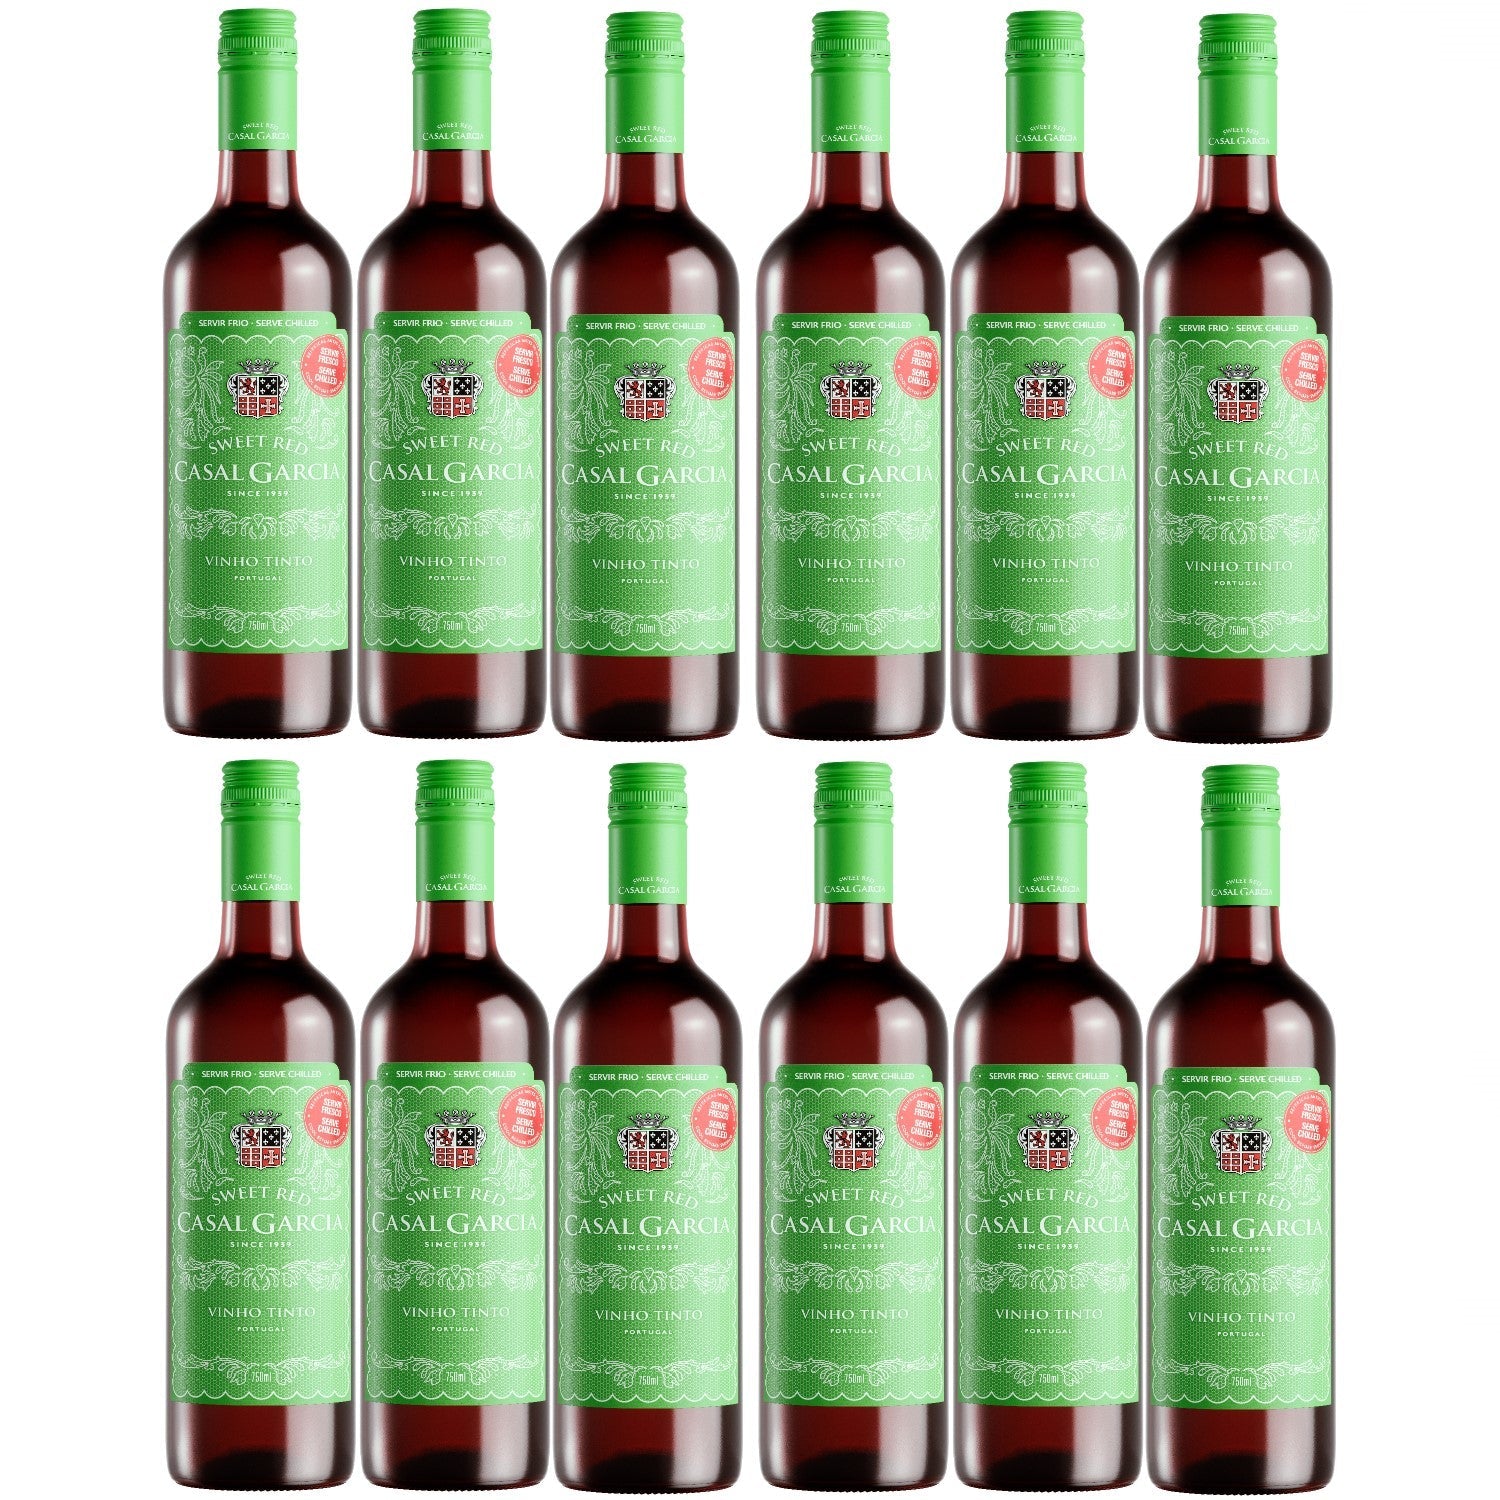 Casal Garcia Sweet Red Rotwein Wein süß Portugal (12 x 0.75l) - Versanel -